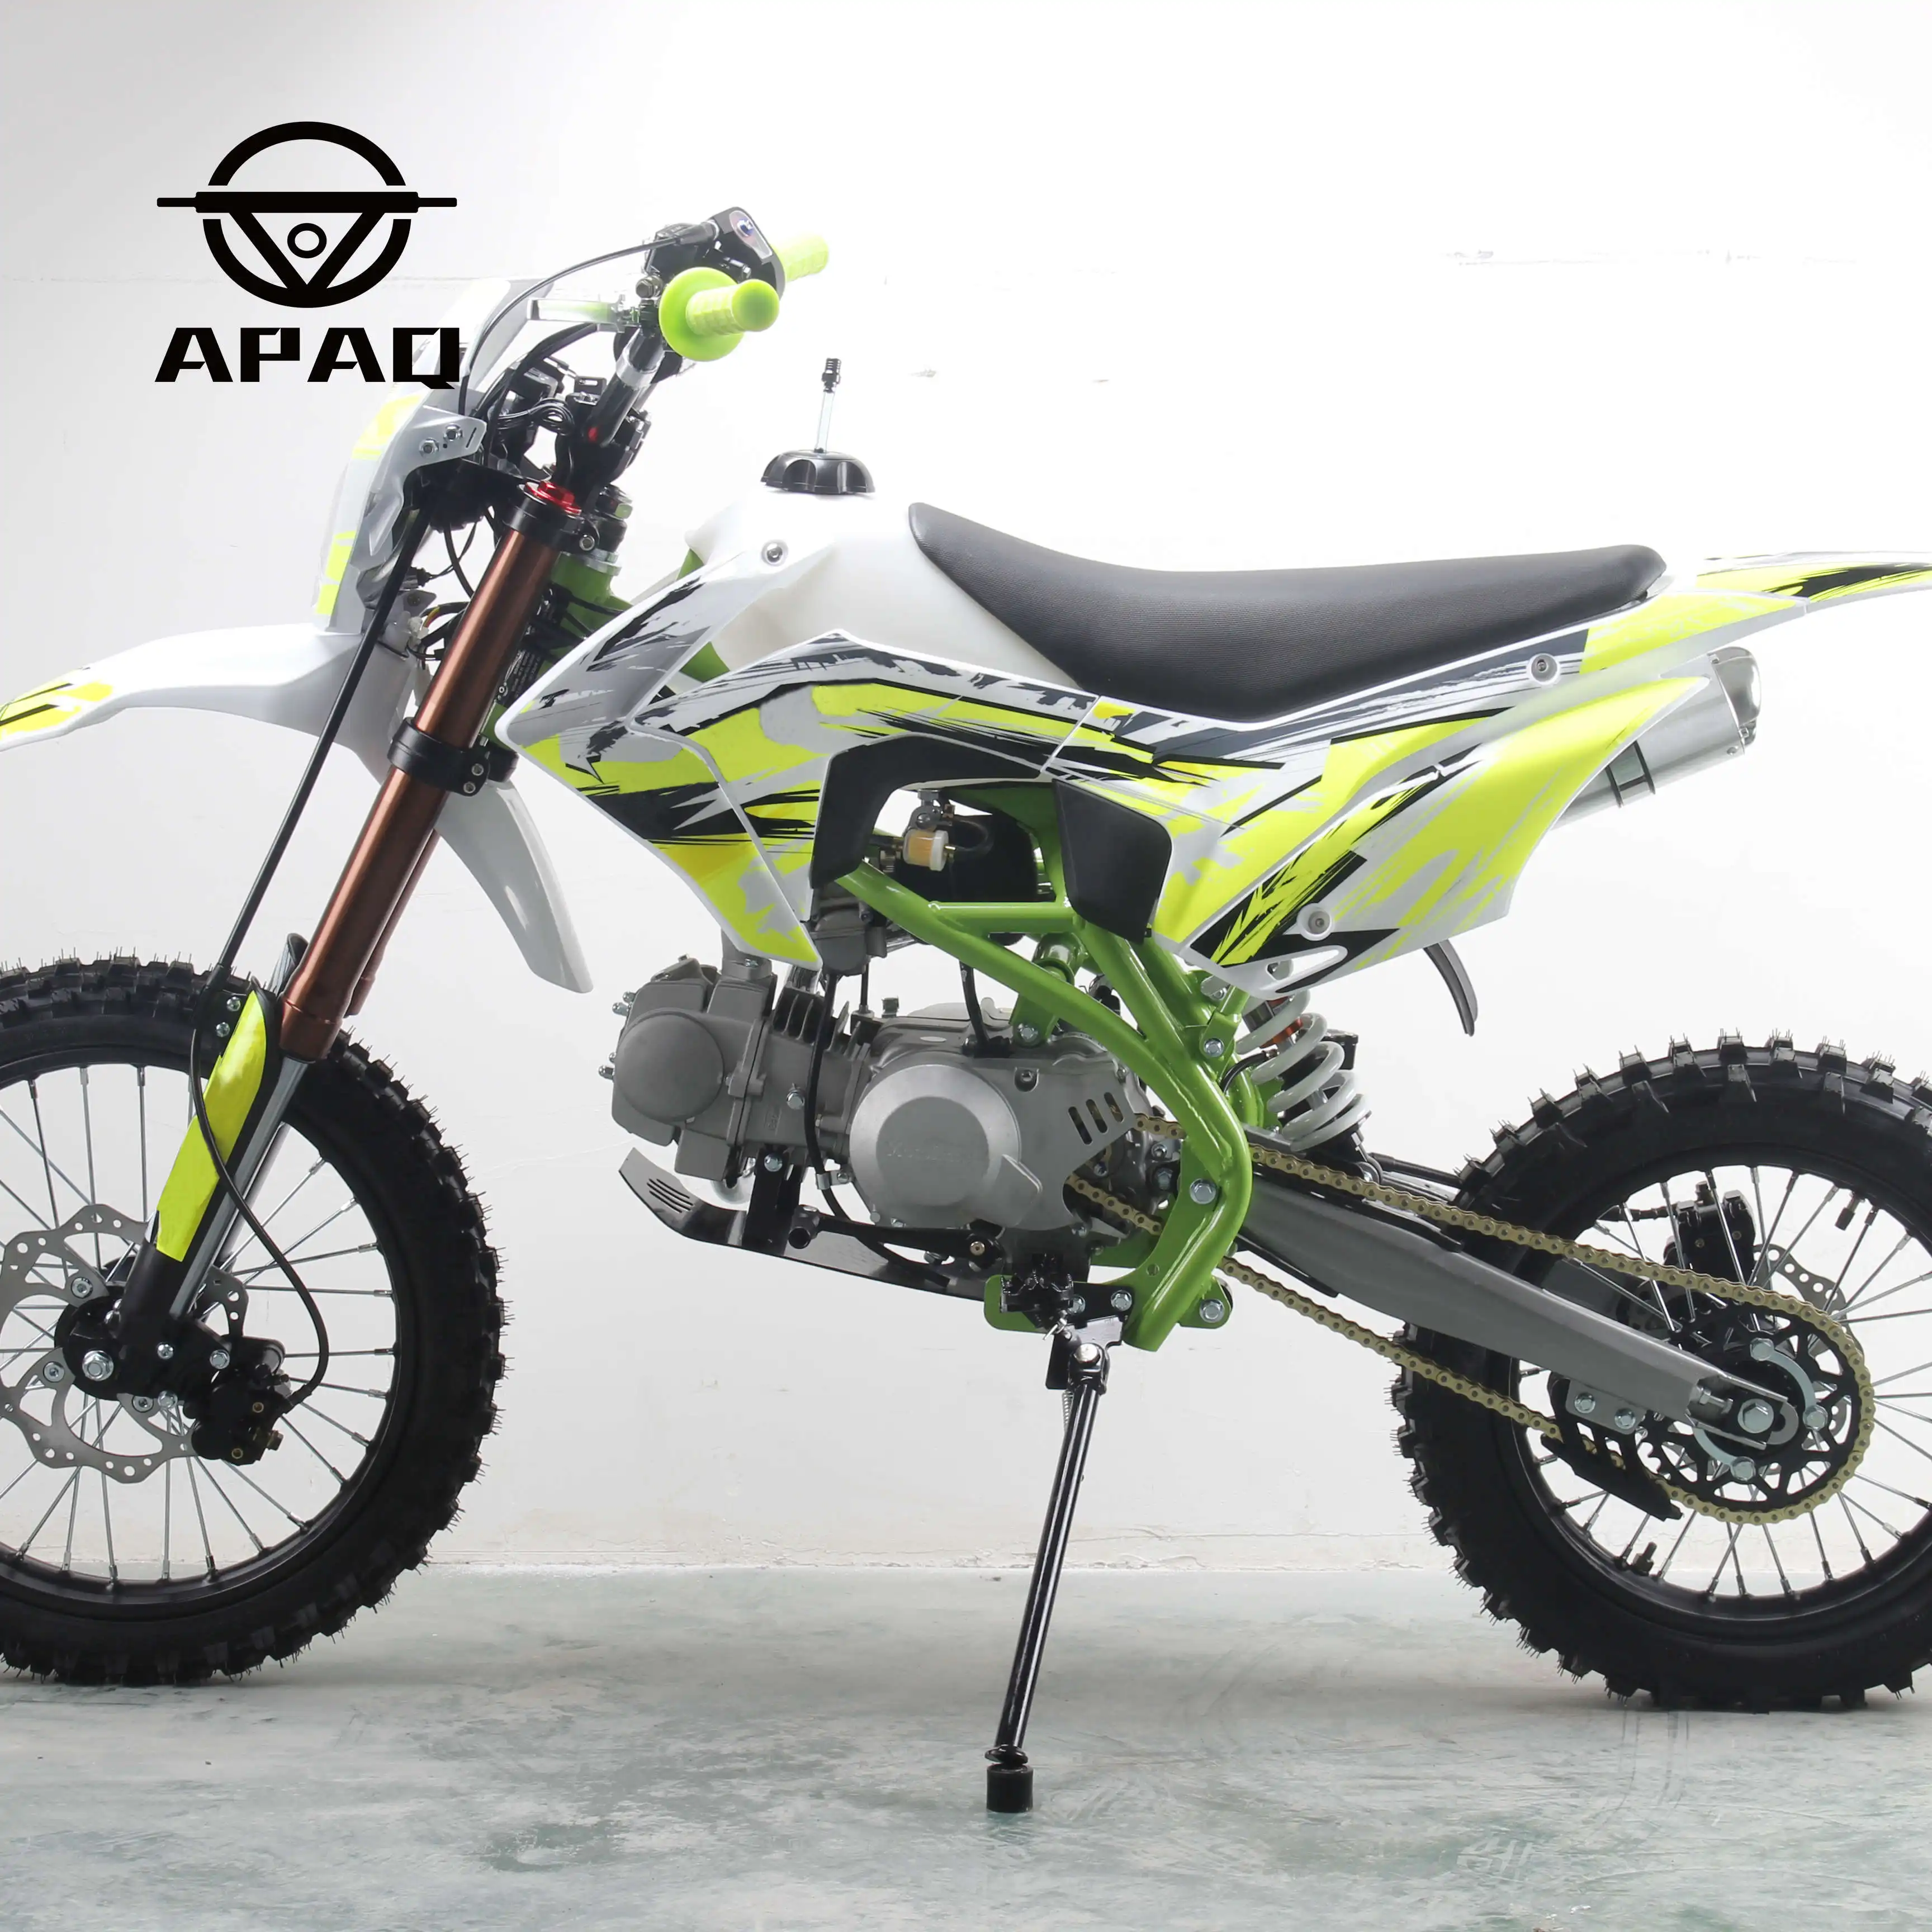 Apaq 125cc dirt bike 17-14 roda off-road motocicletas